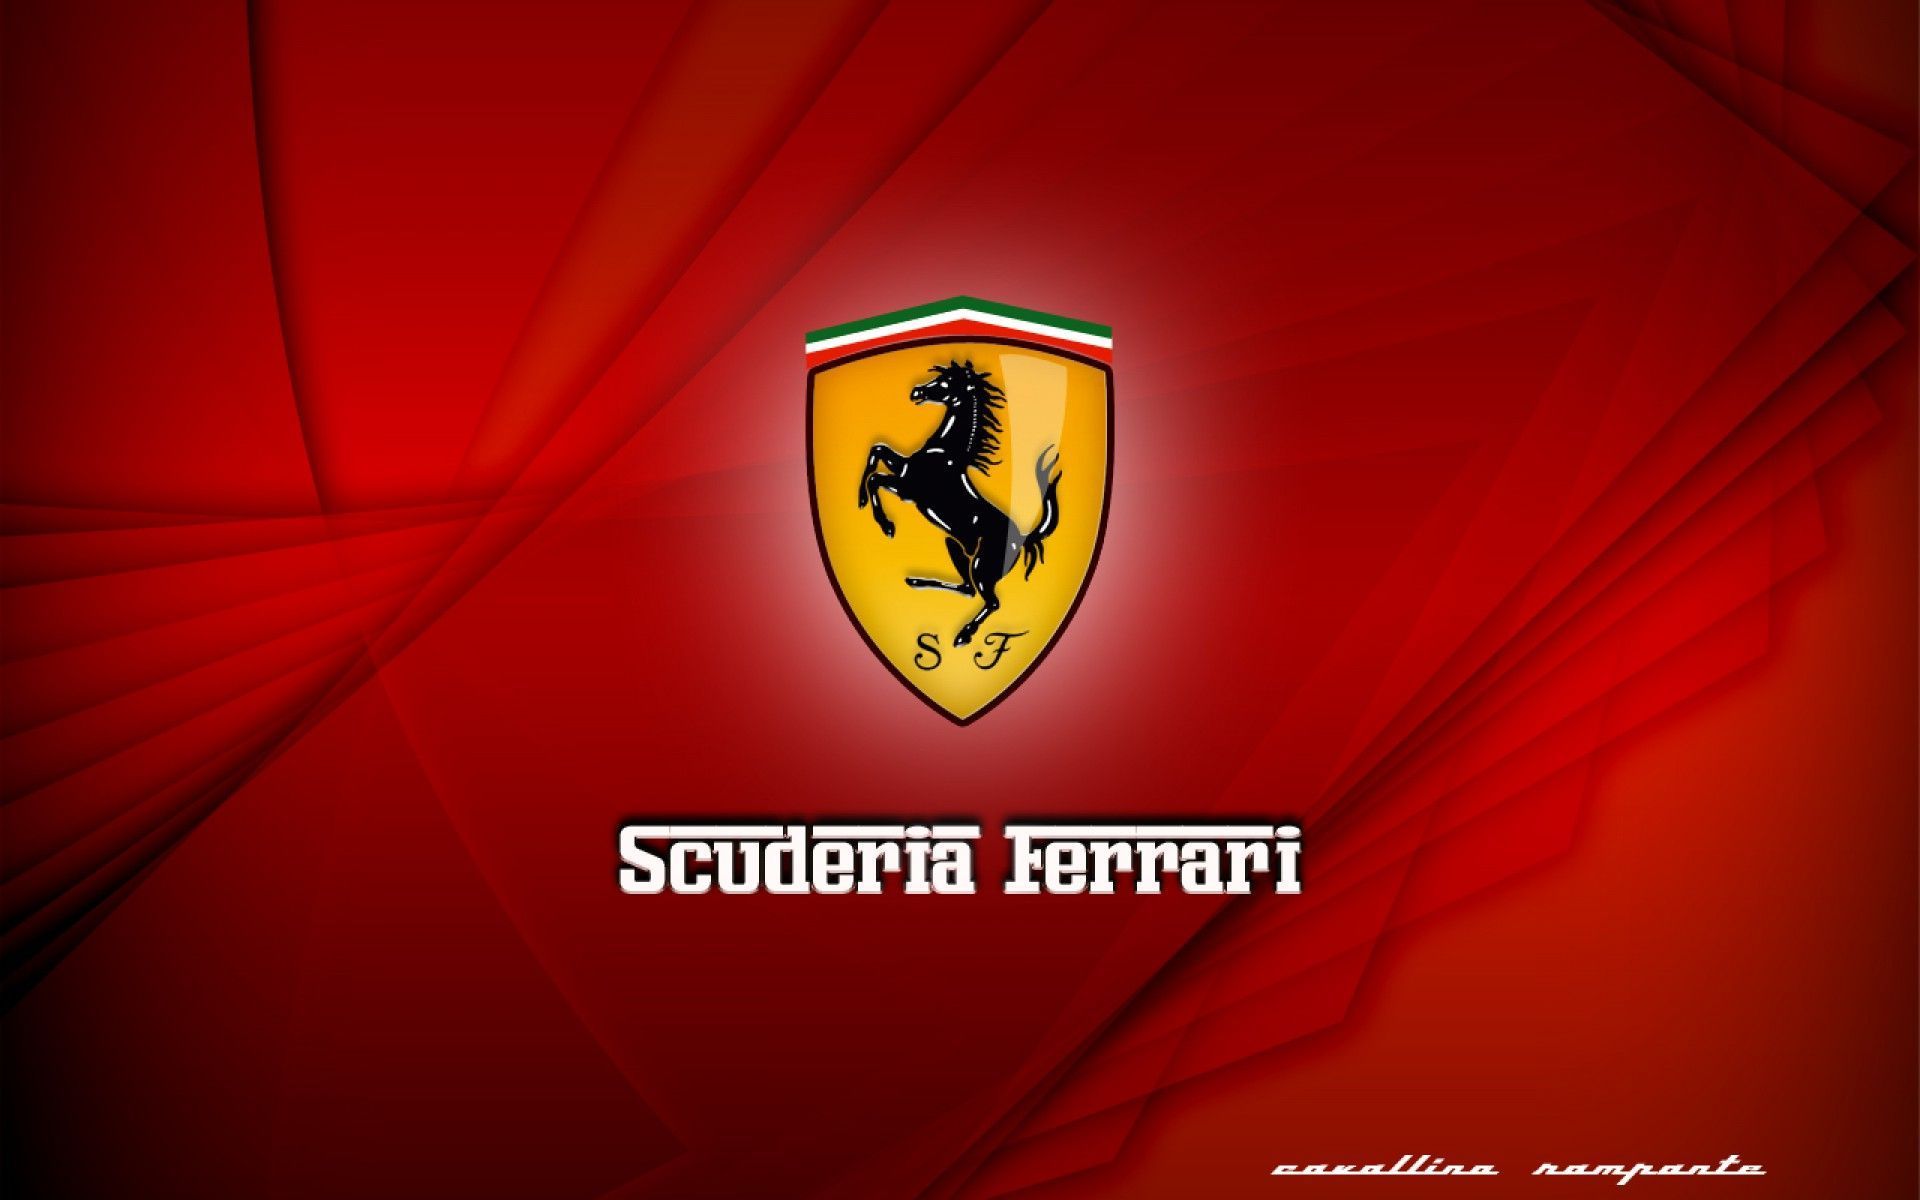 Scuderia ferrari logo wallpapers